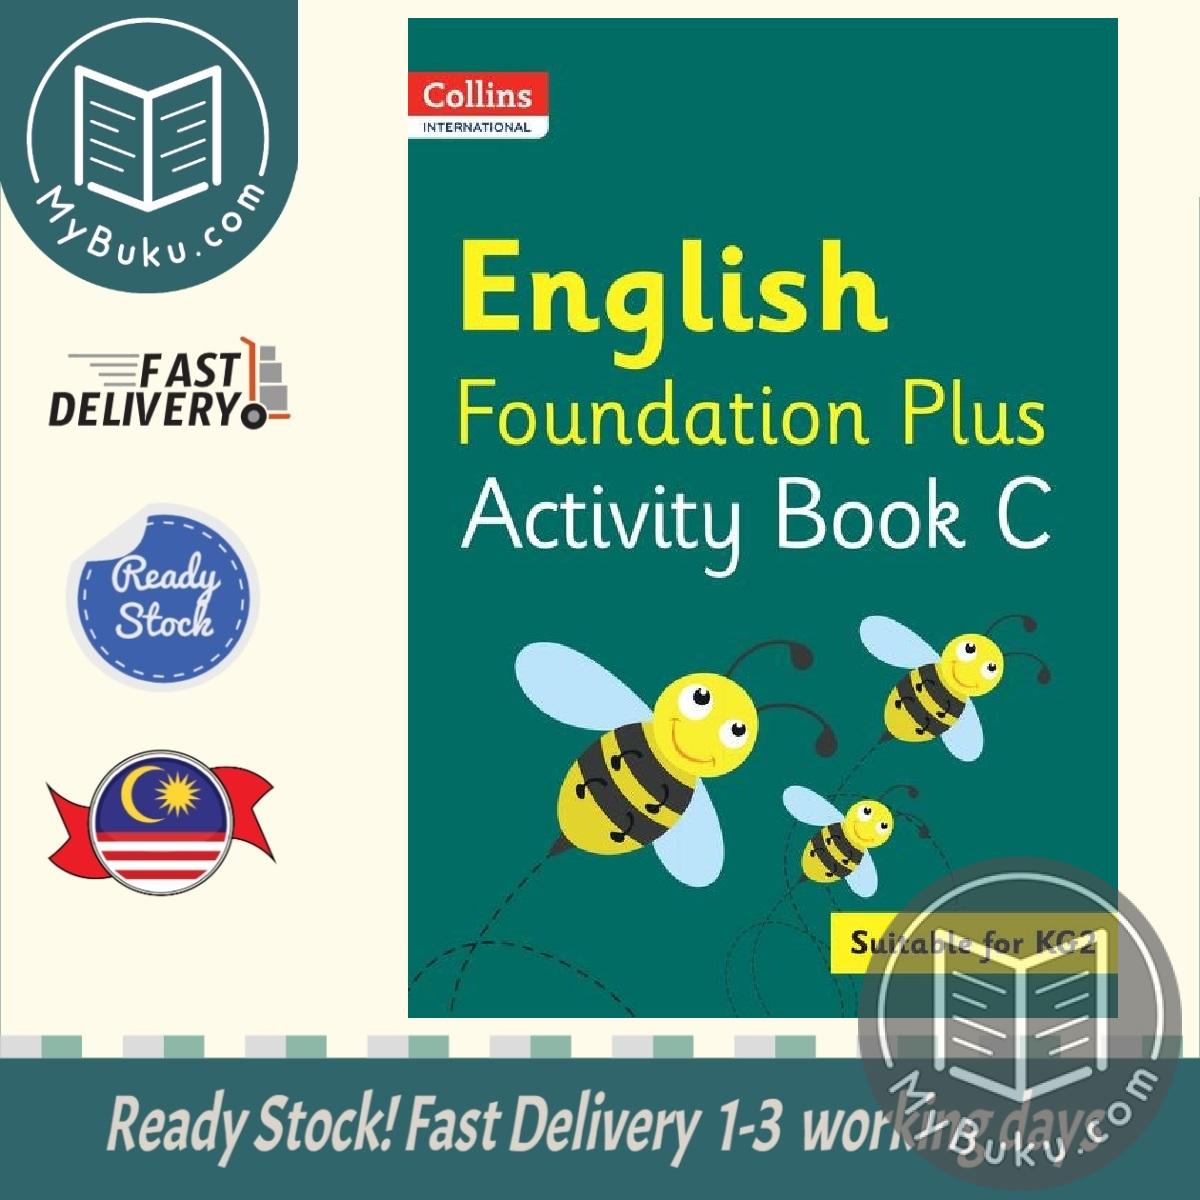 Collins International English Foundation Plus Activity Book C - Fiona Macgregor - 9780008468620 - HarperCollins